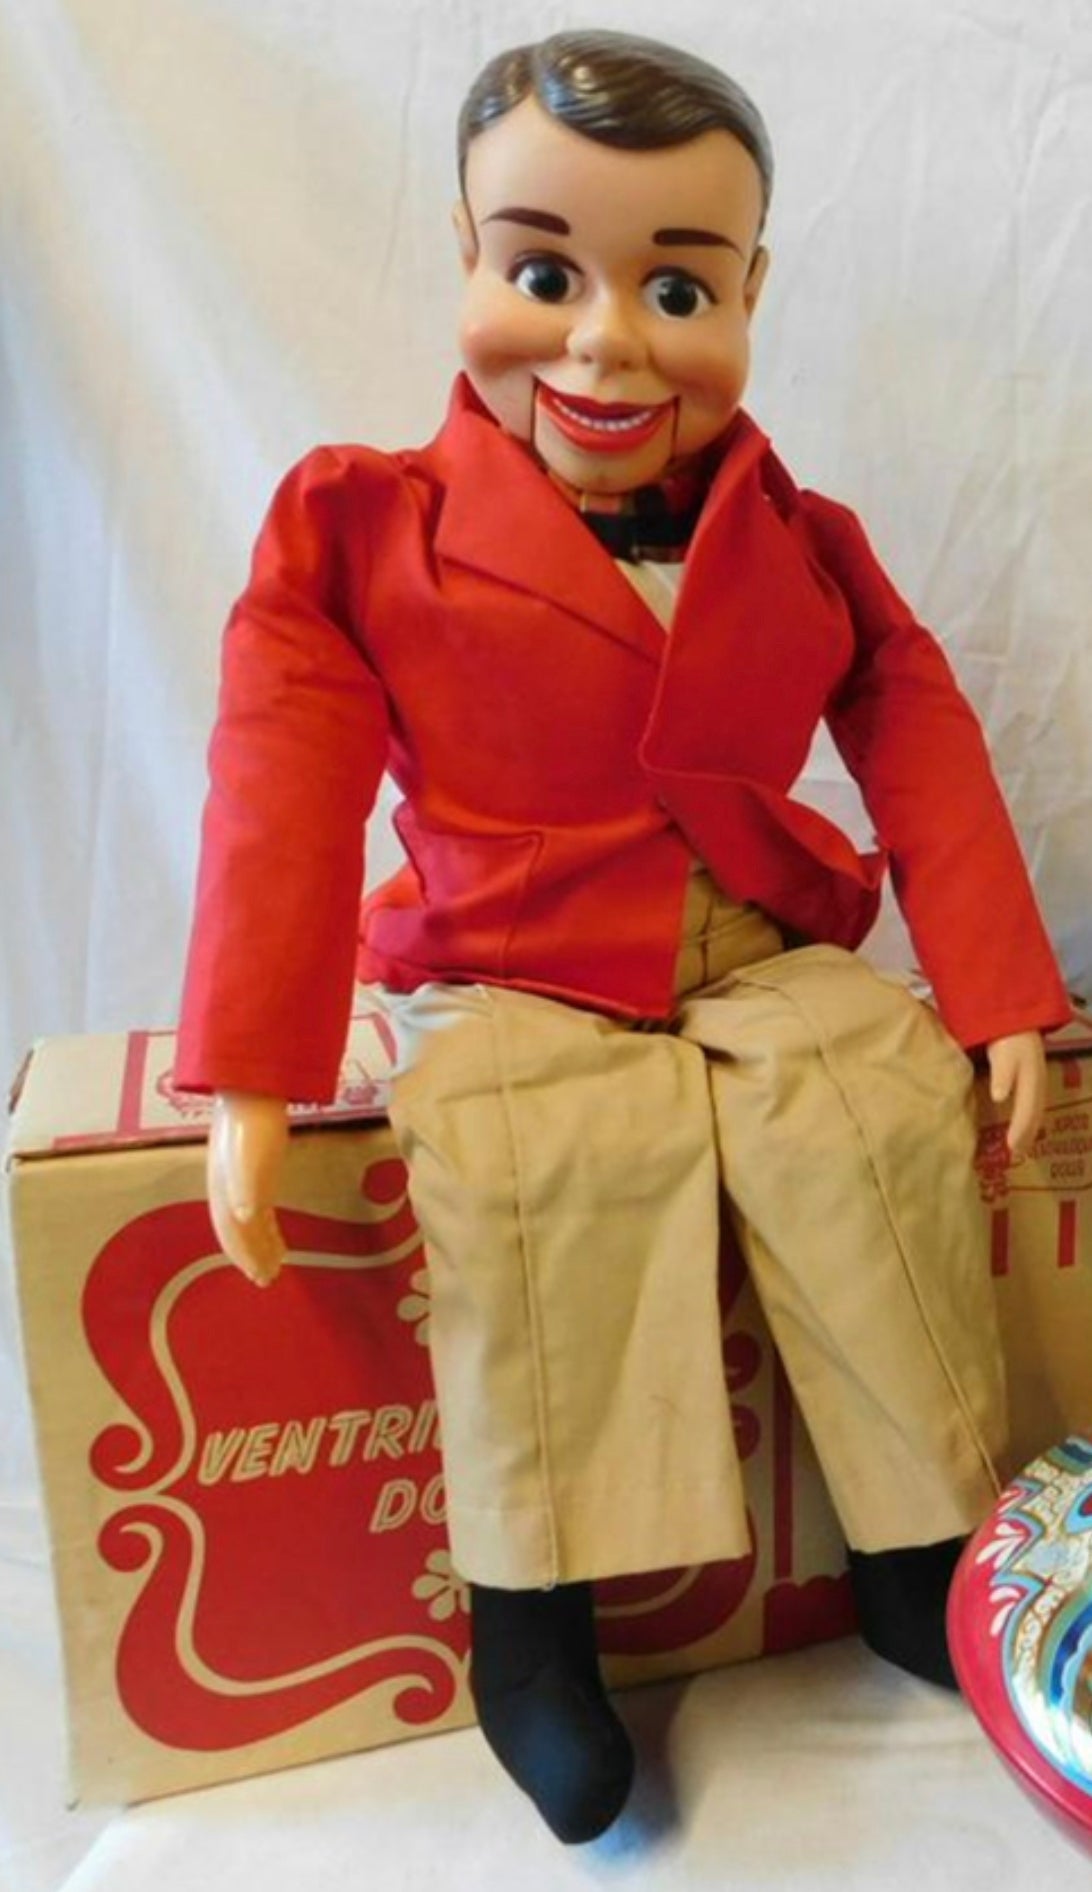 Ventriloquist Charlie McCarthy 24.5” in Box